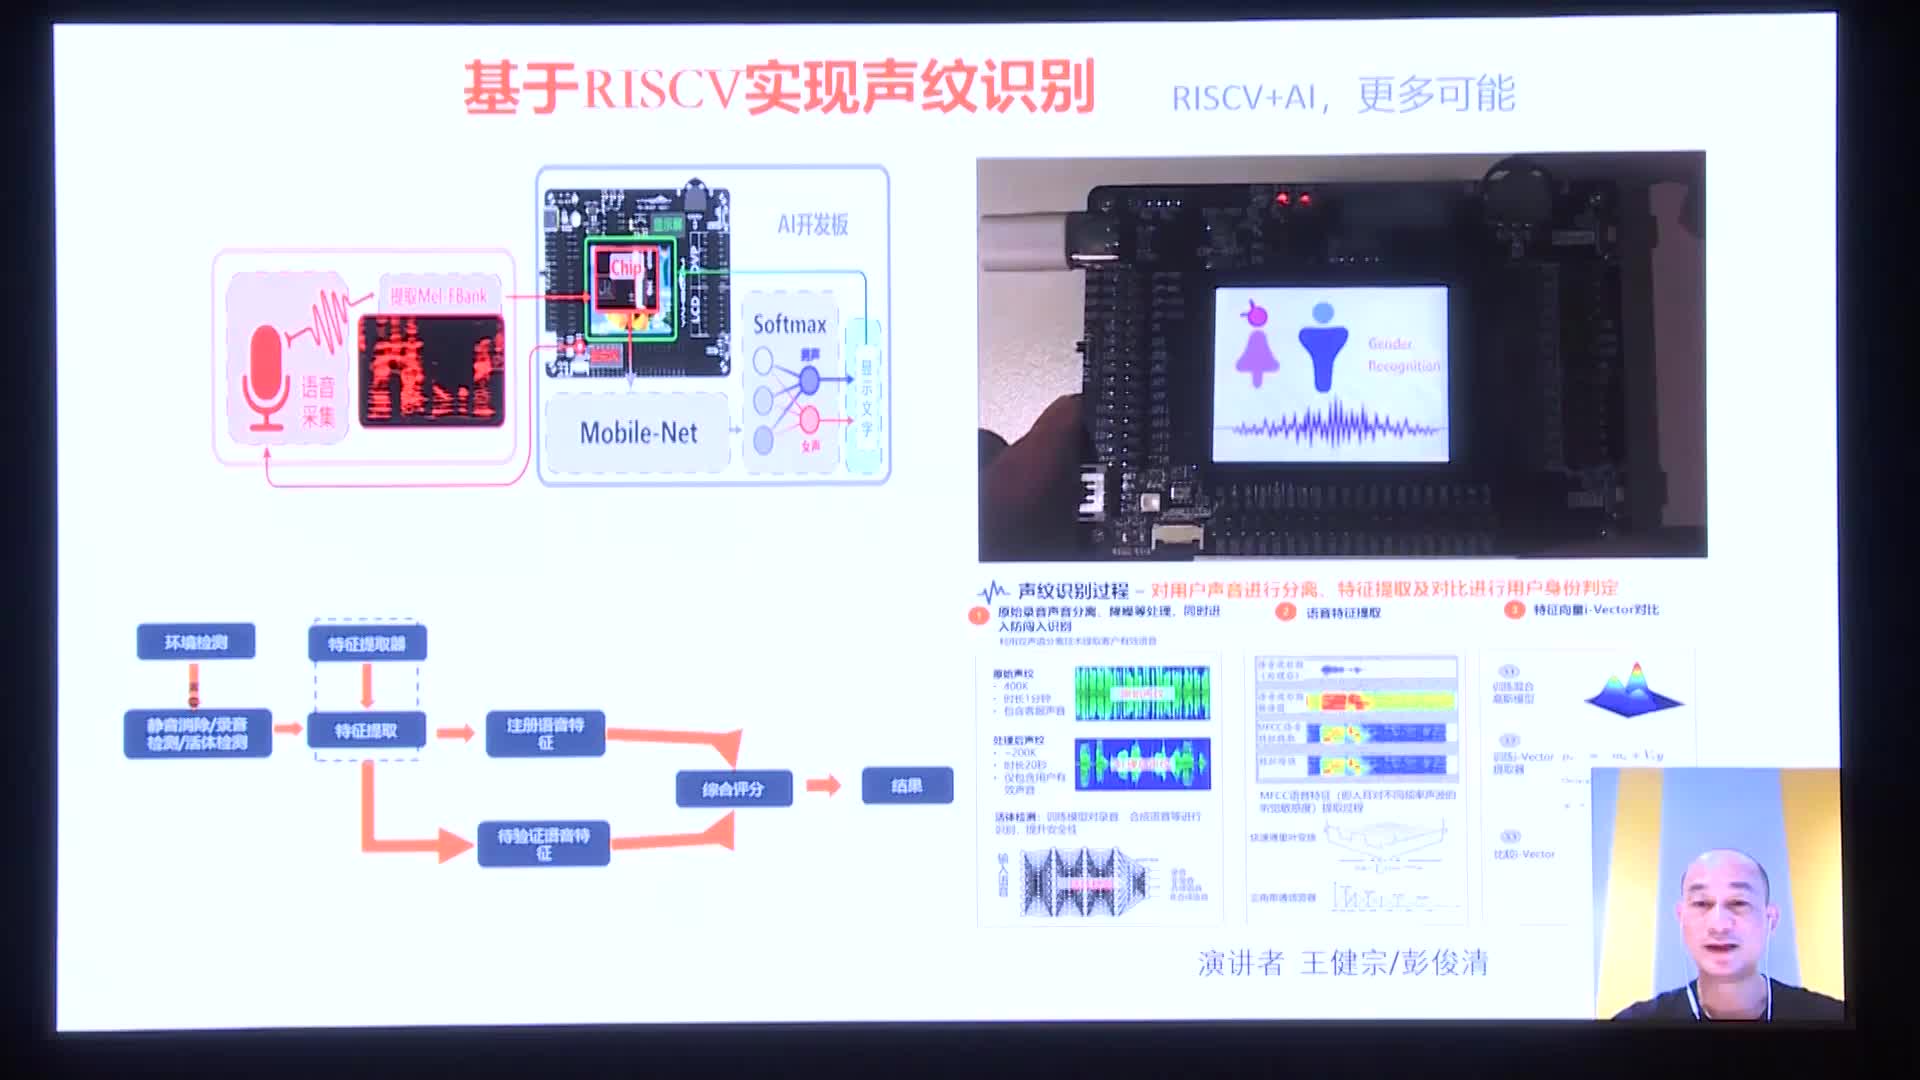 POSTER - 基于RISCV实现声纹识别的探索与实践 - 王健宗、彭俊清